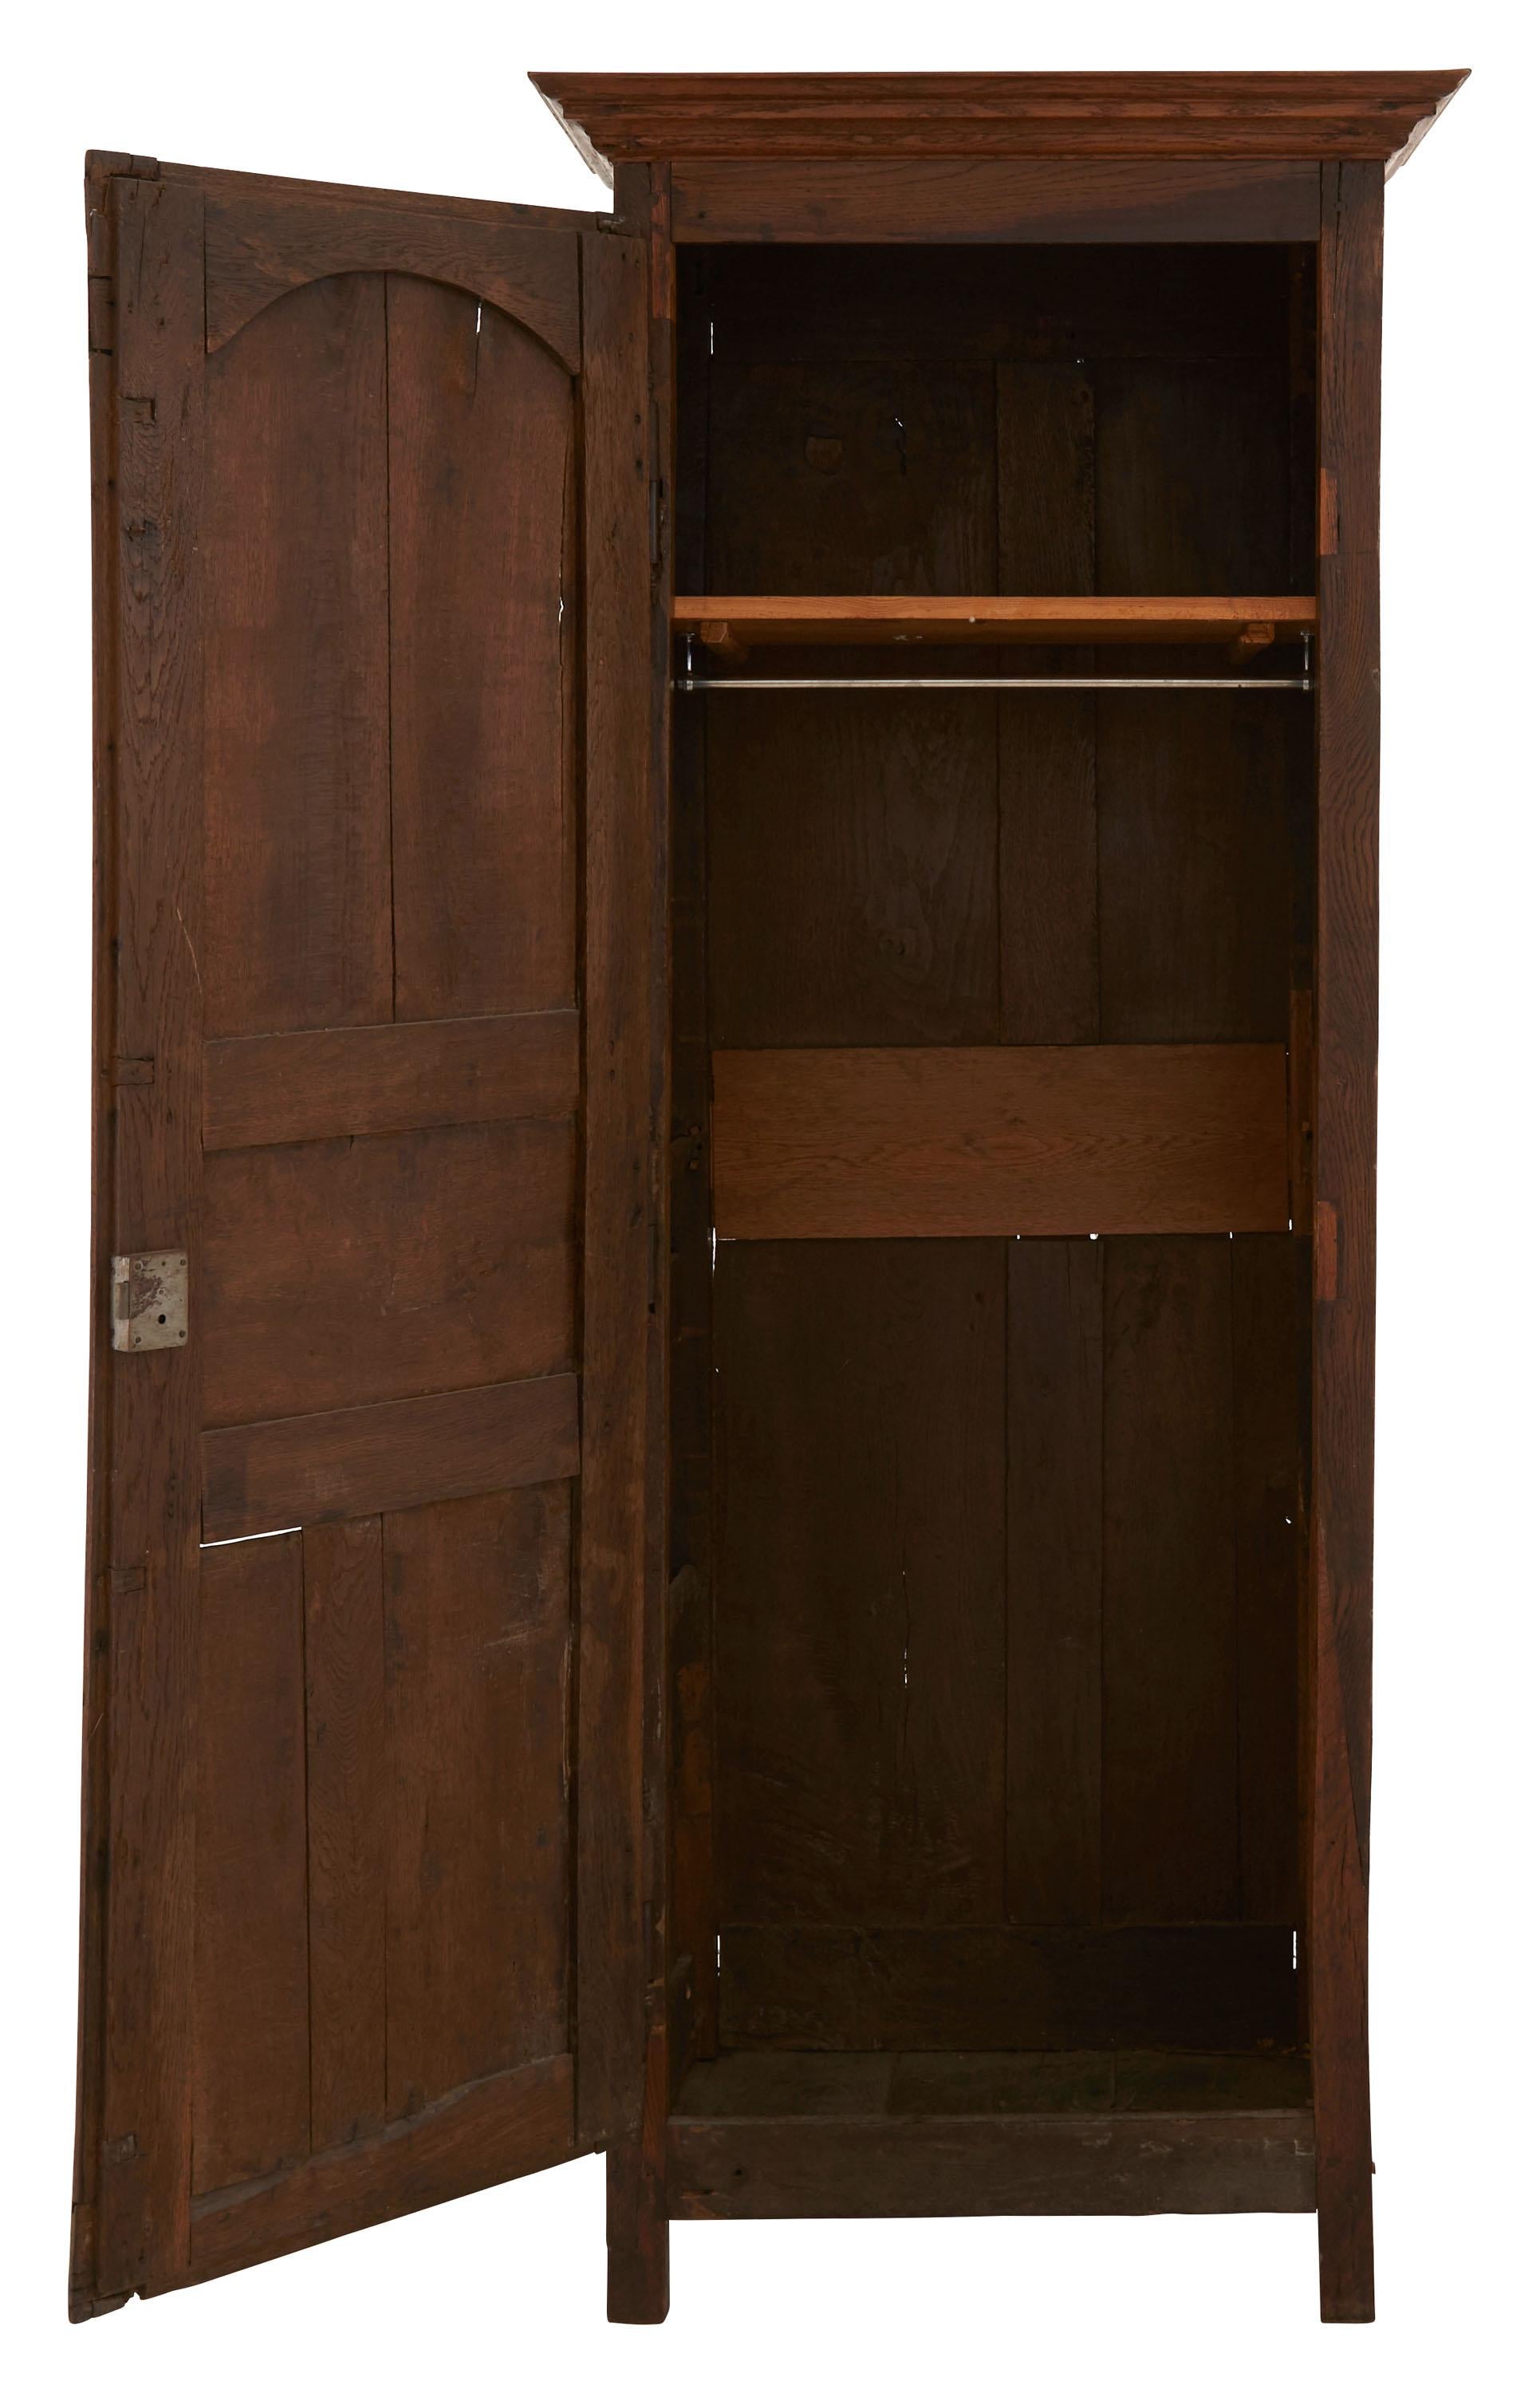 Late 19th Century French Wooden Wardrobe (19. Jahrhundert)